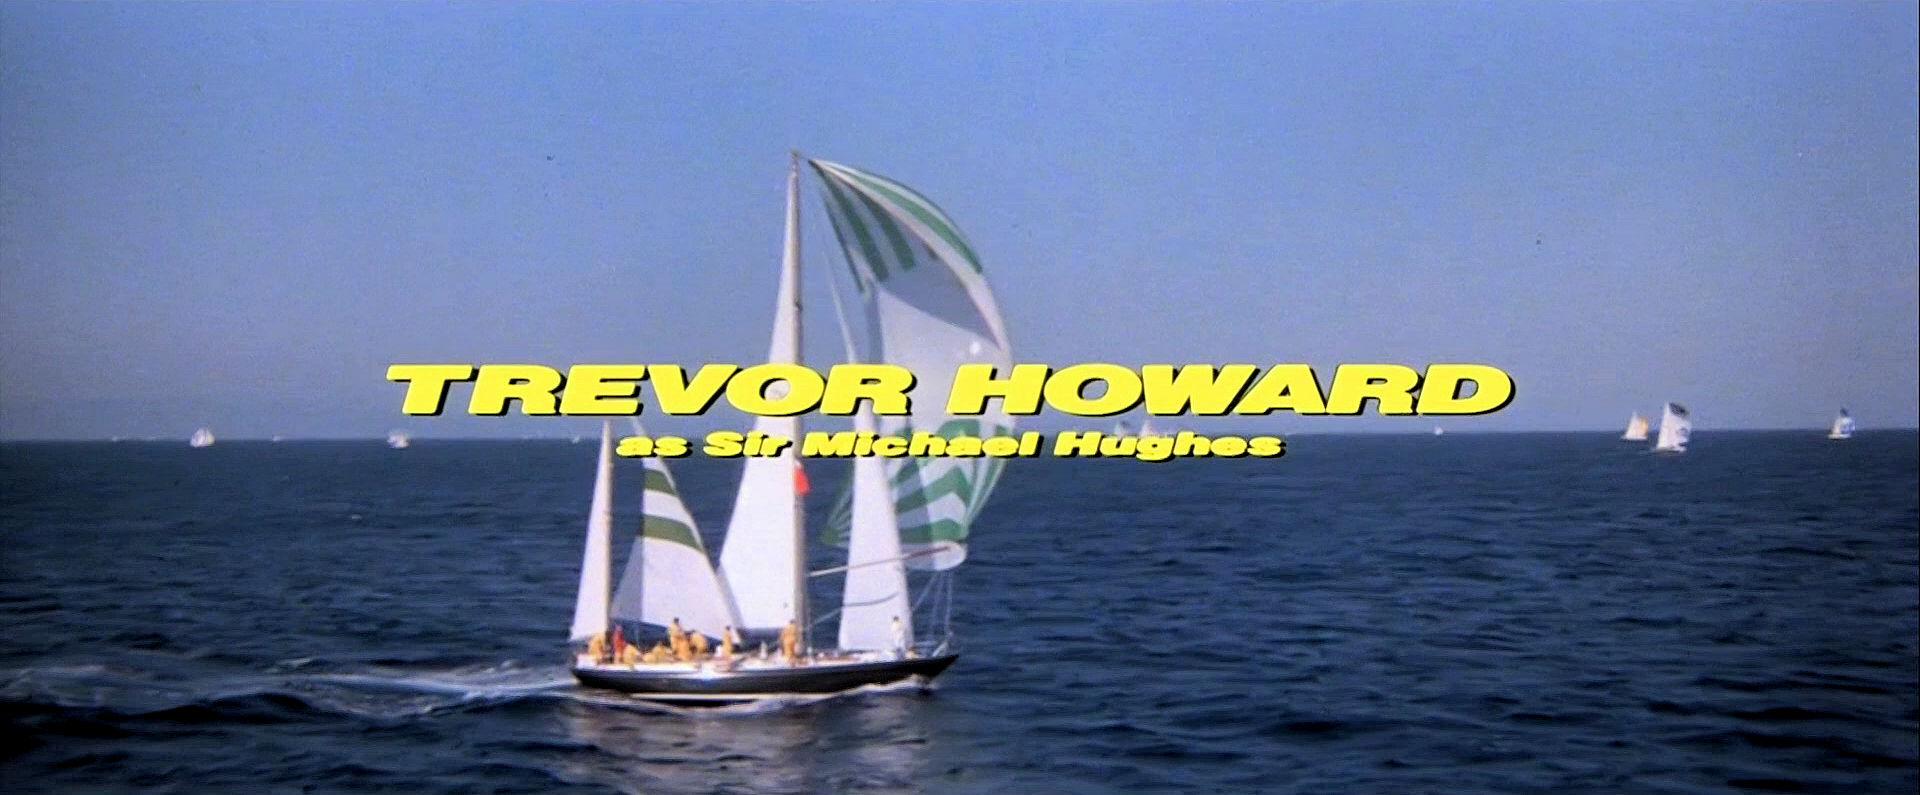 Main title from Meteor (1979) (8). Trevor Howard as Sir Michael Hughes